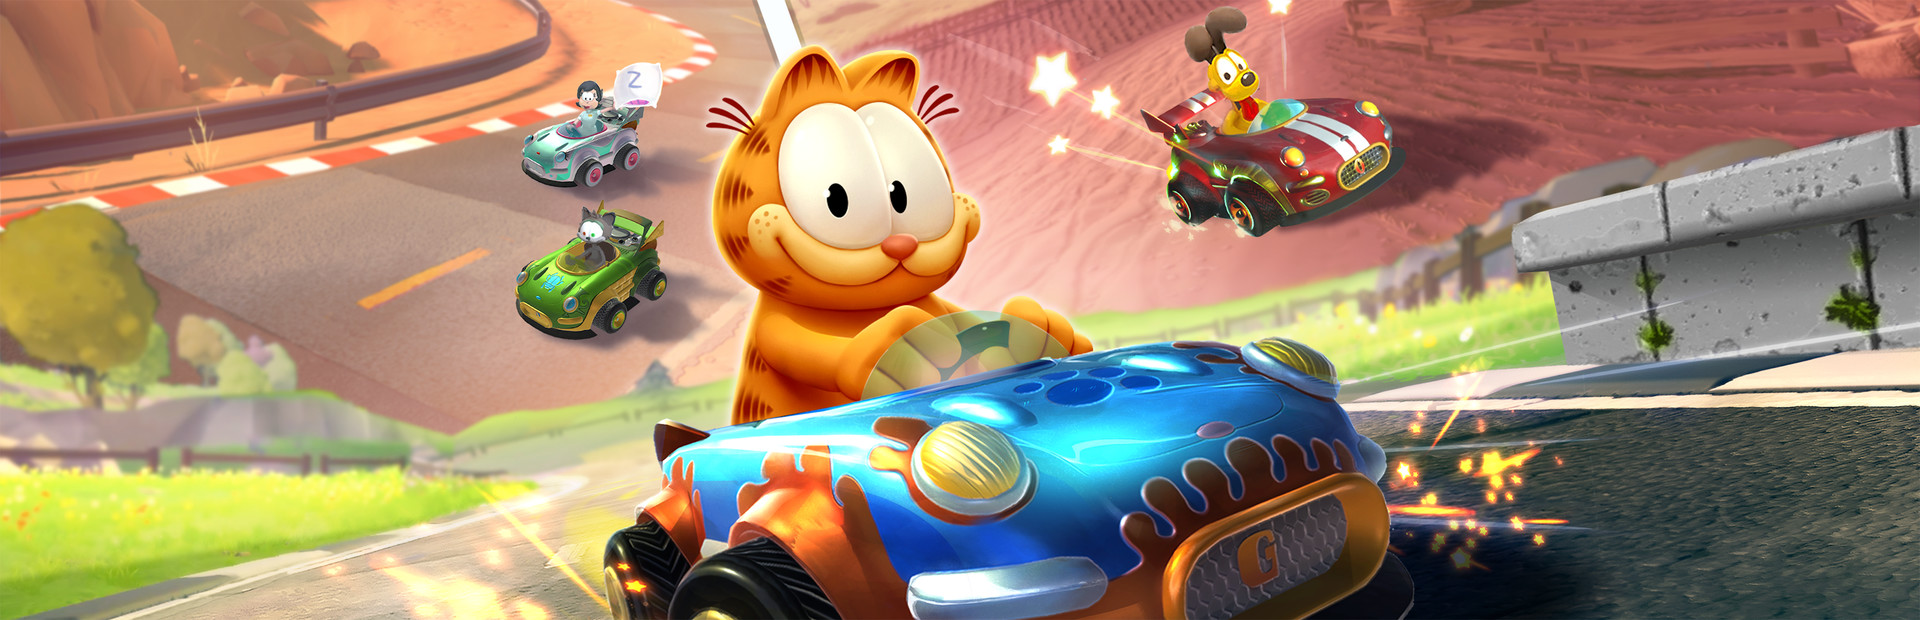 Garfield Kart - Furious Racing cover image